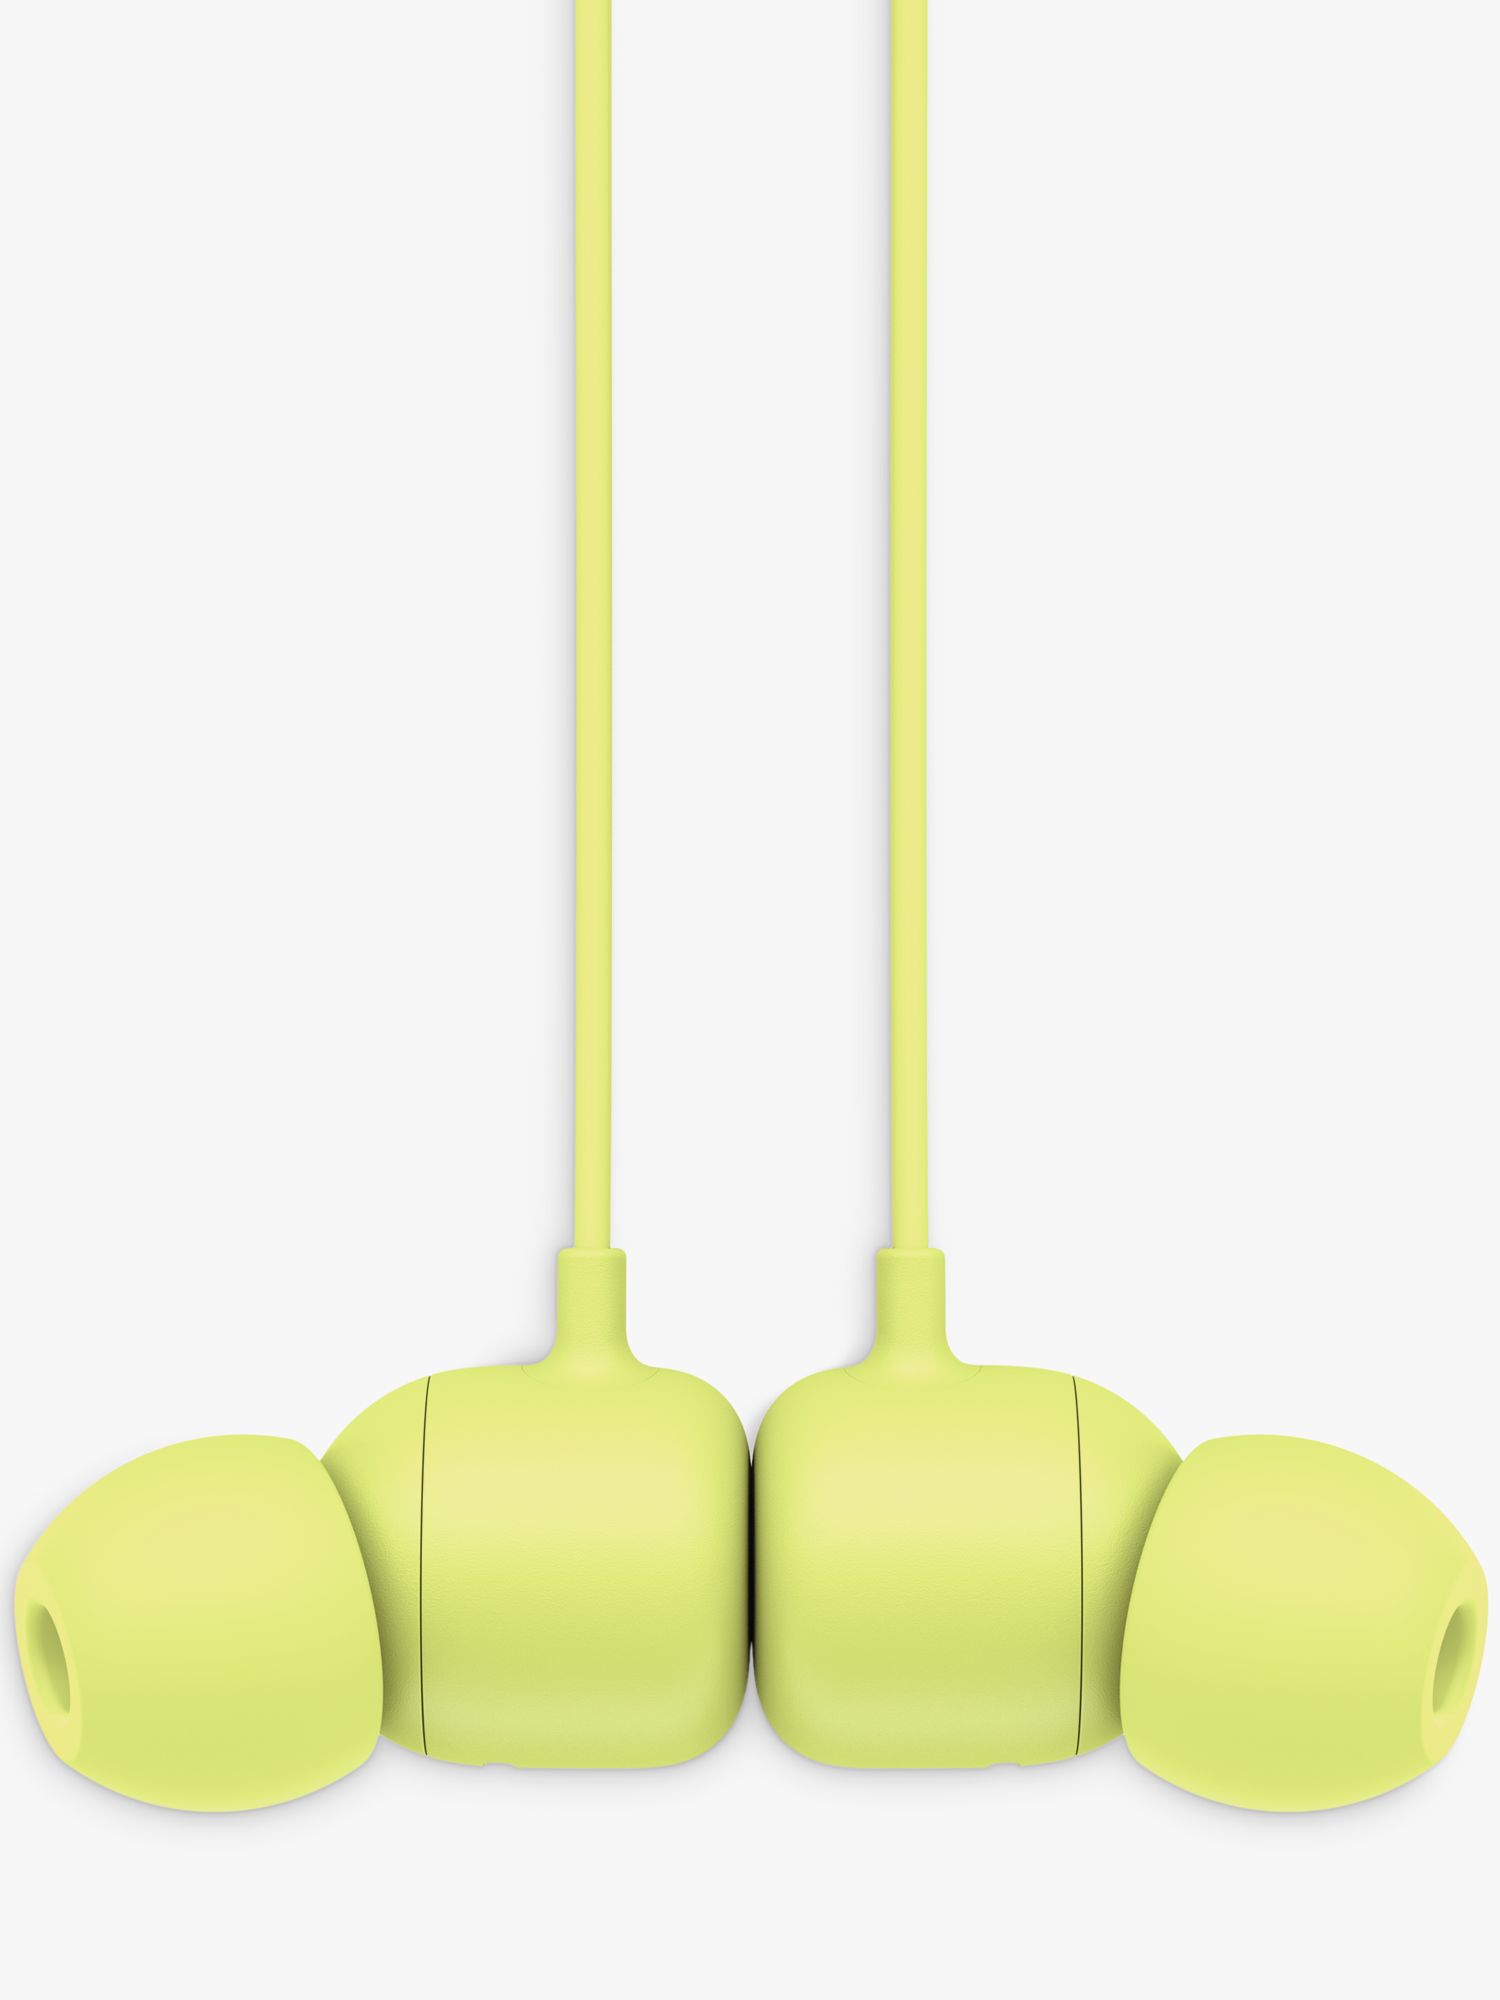 Beats Flex All-Day Wireless Earphones Yuzu Yellow